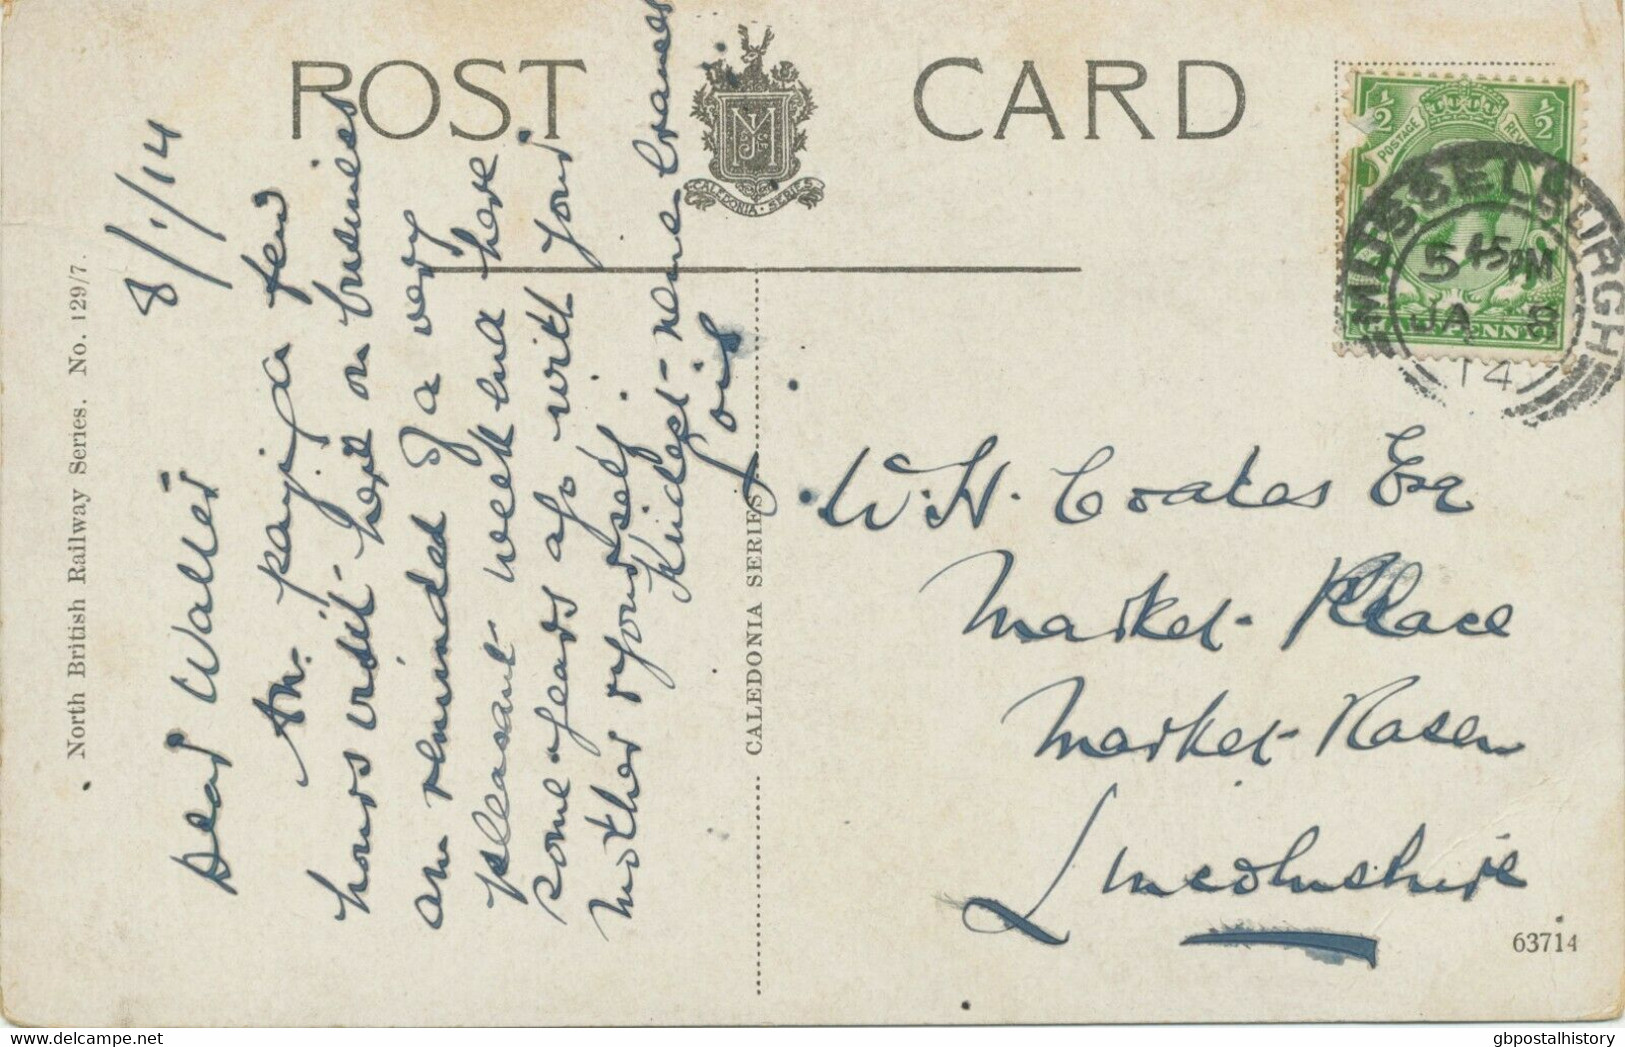 GB SCOTTISH VILLAGE POSTMARKS „MUSSELBURGH“ Very Fine Strike (25mm, Time Code „5 45PM“) On Very Fine Col. Postcard 1914 - Scozia